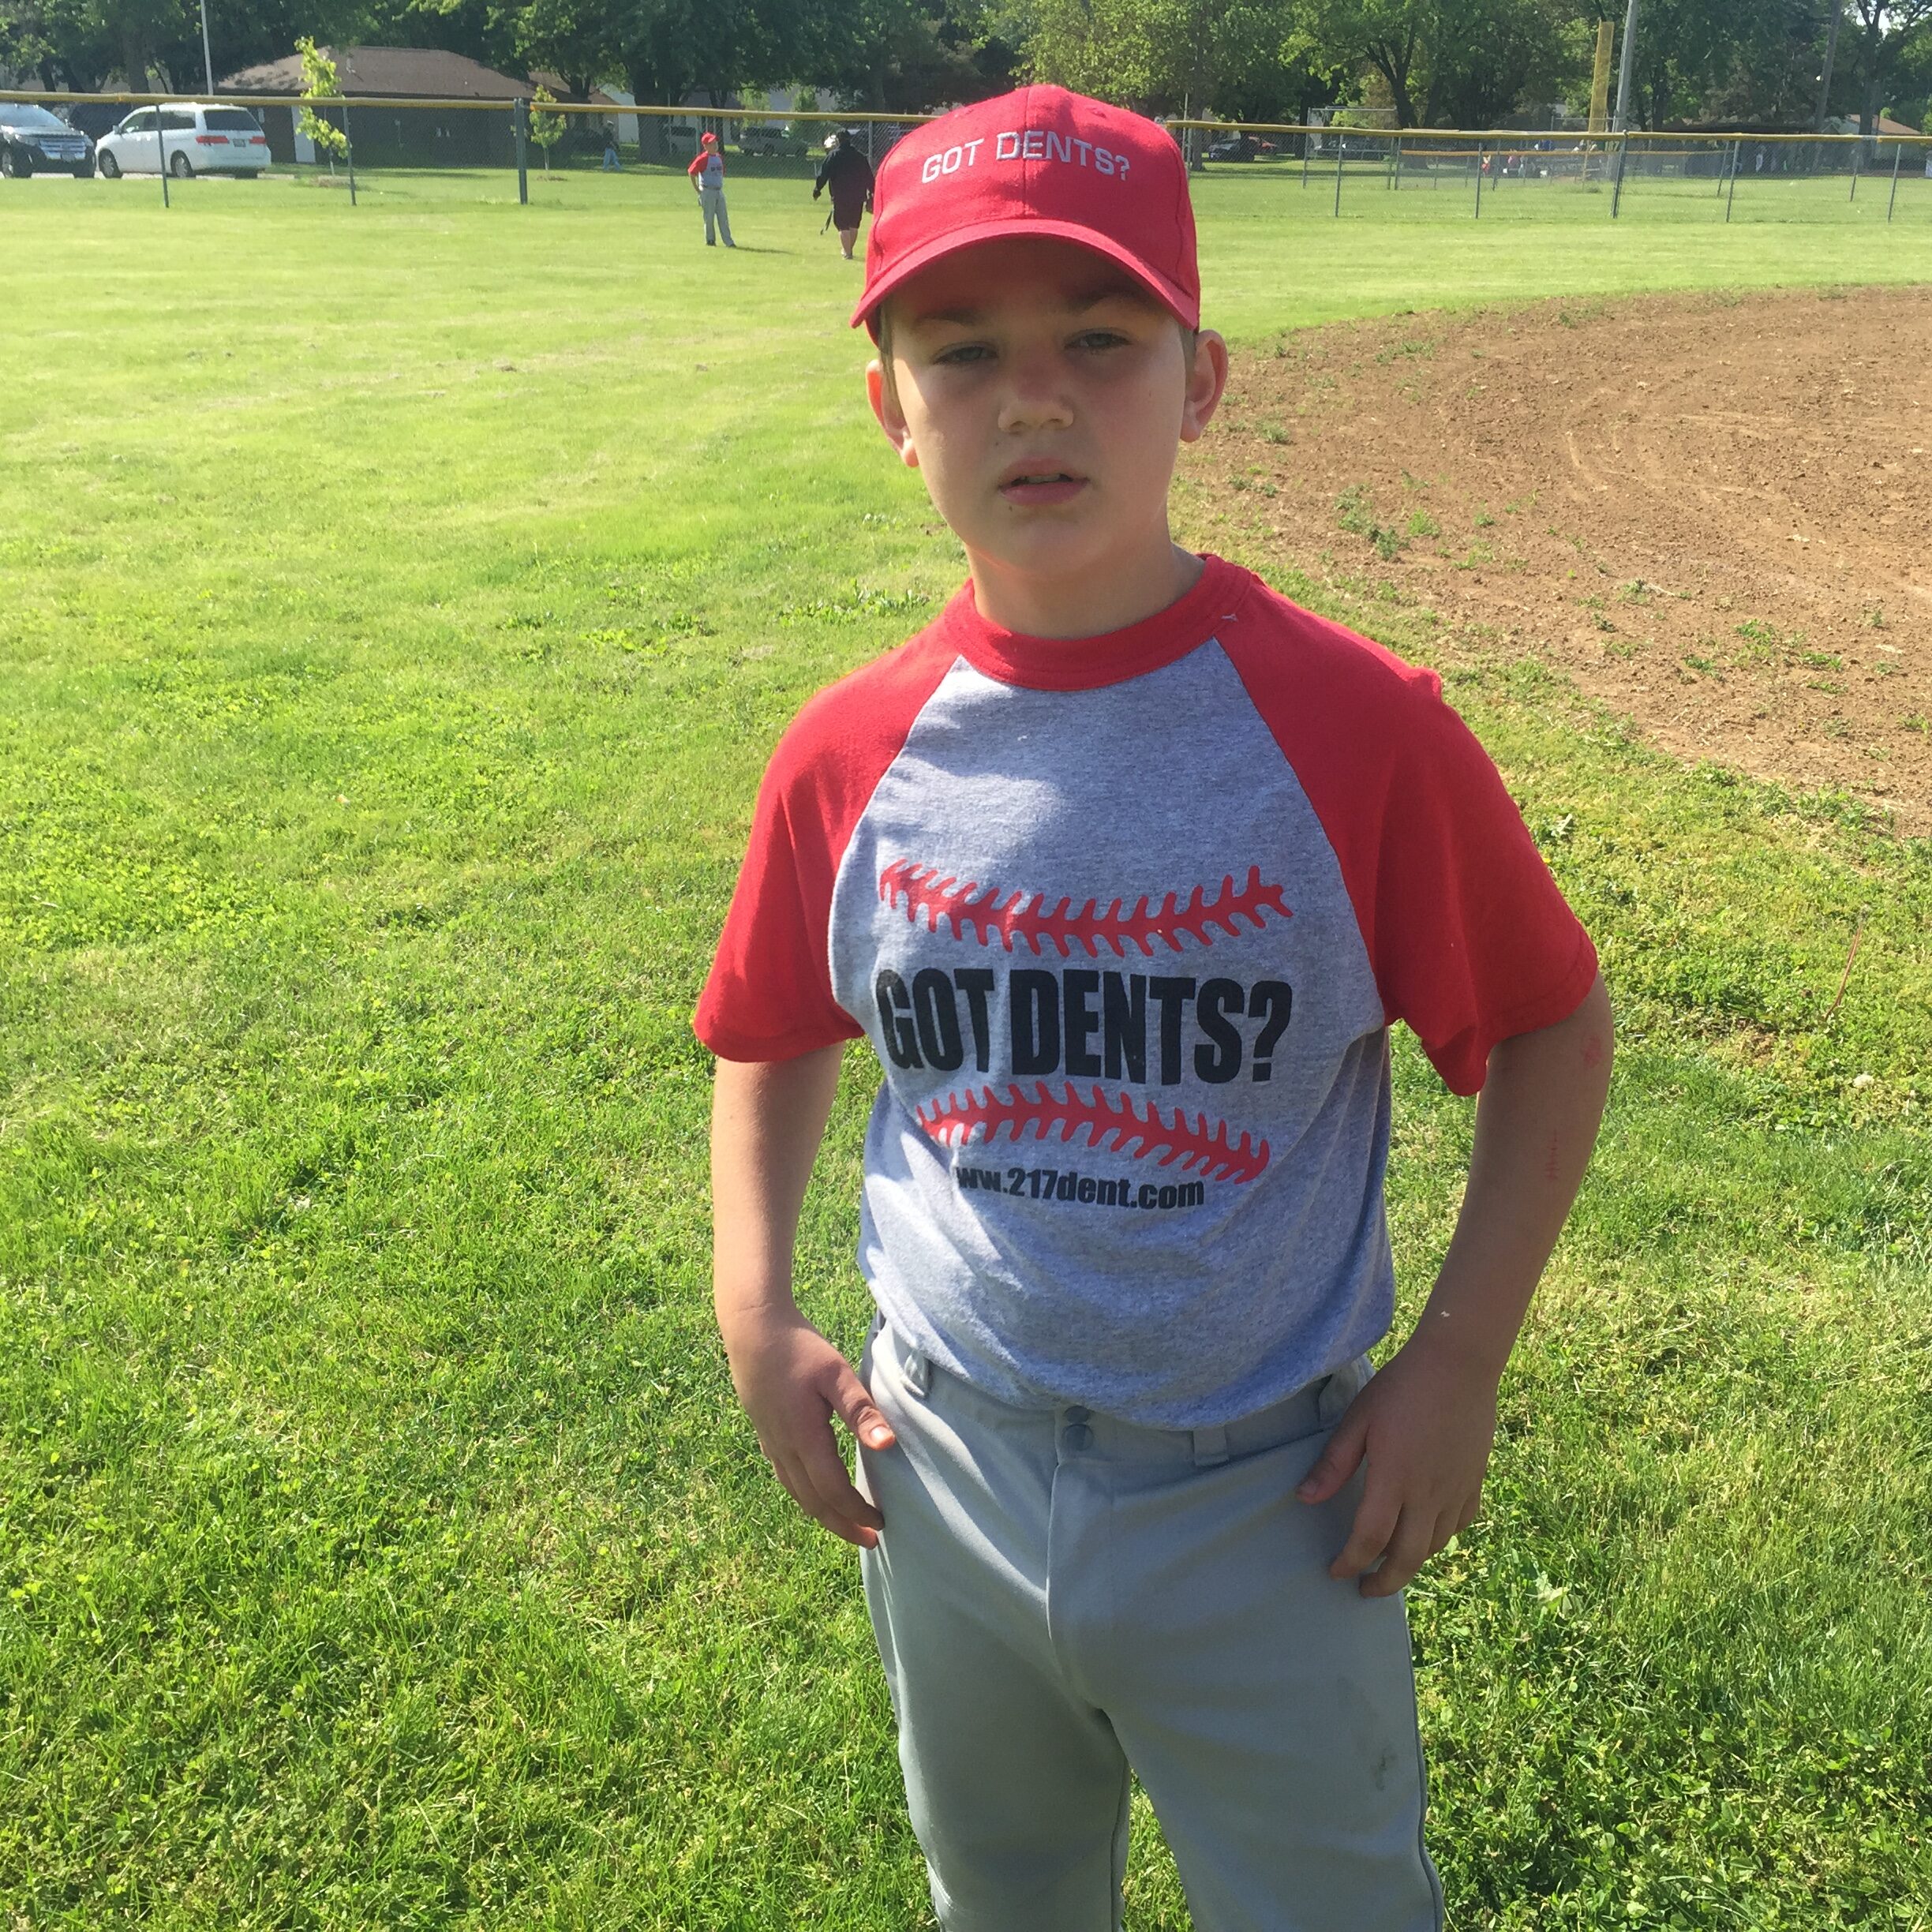 http://217dent.com 2016 Got Dents Springfield, IL Images baseball team sponsored